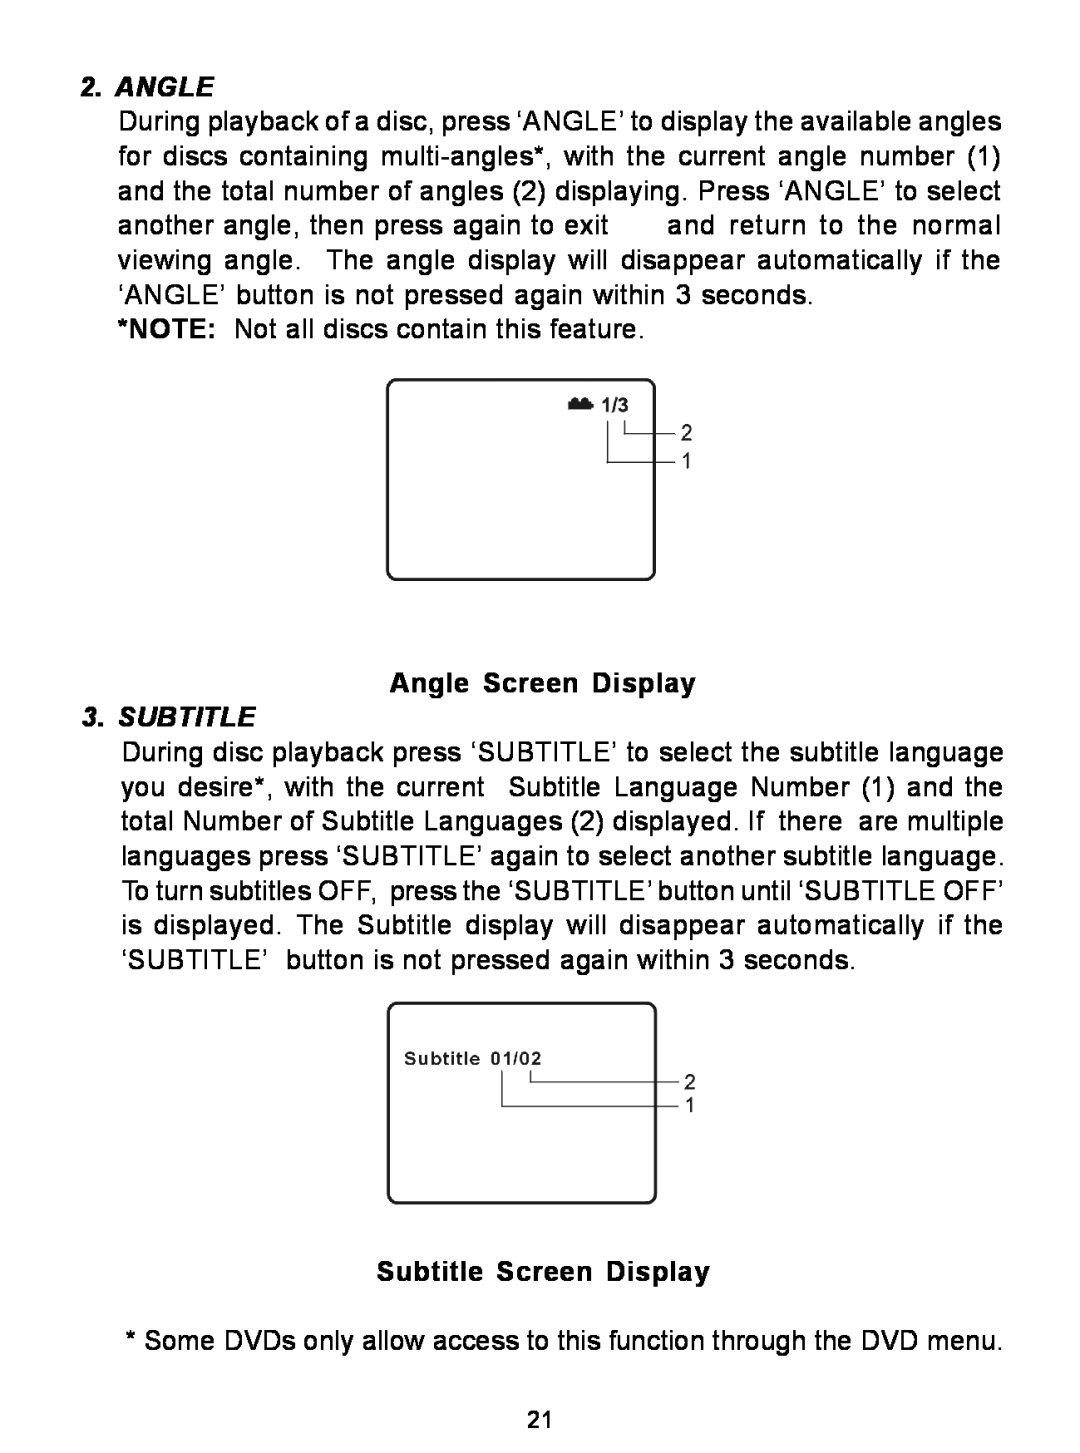 Audiovox D1726 manual Angle Screen Display, Subtitle Screen Display 